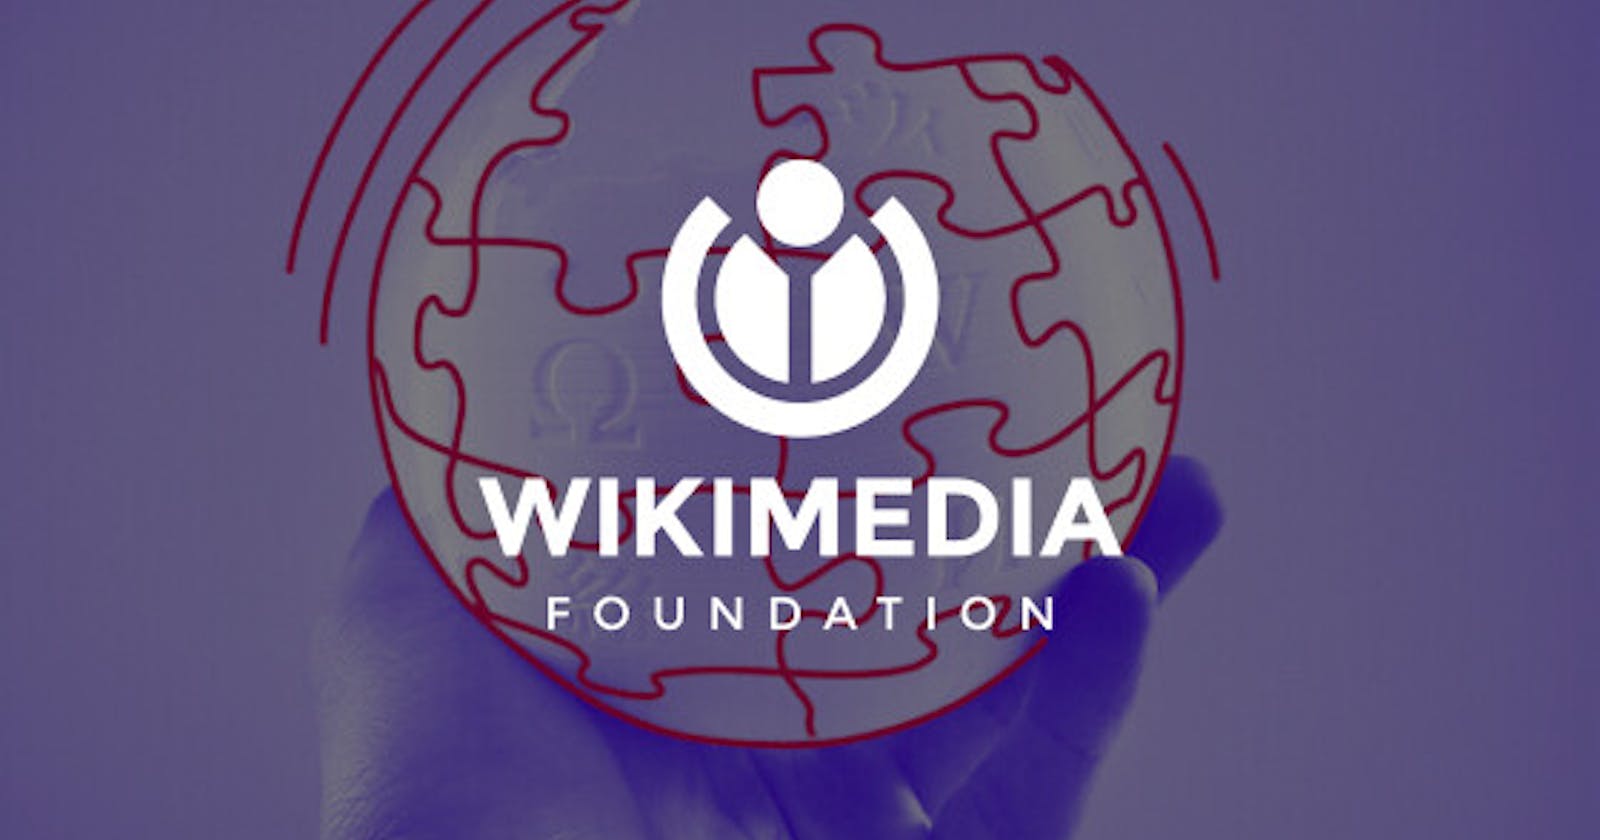 What's my Wikimedia Foundation footprint?